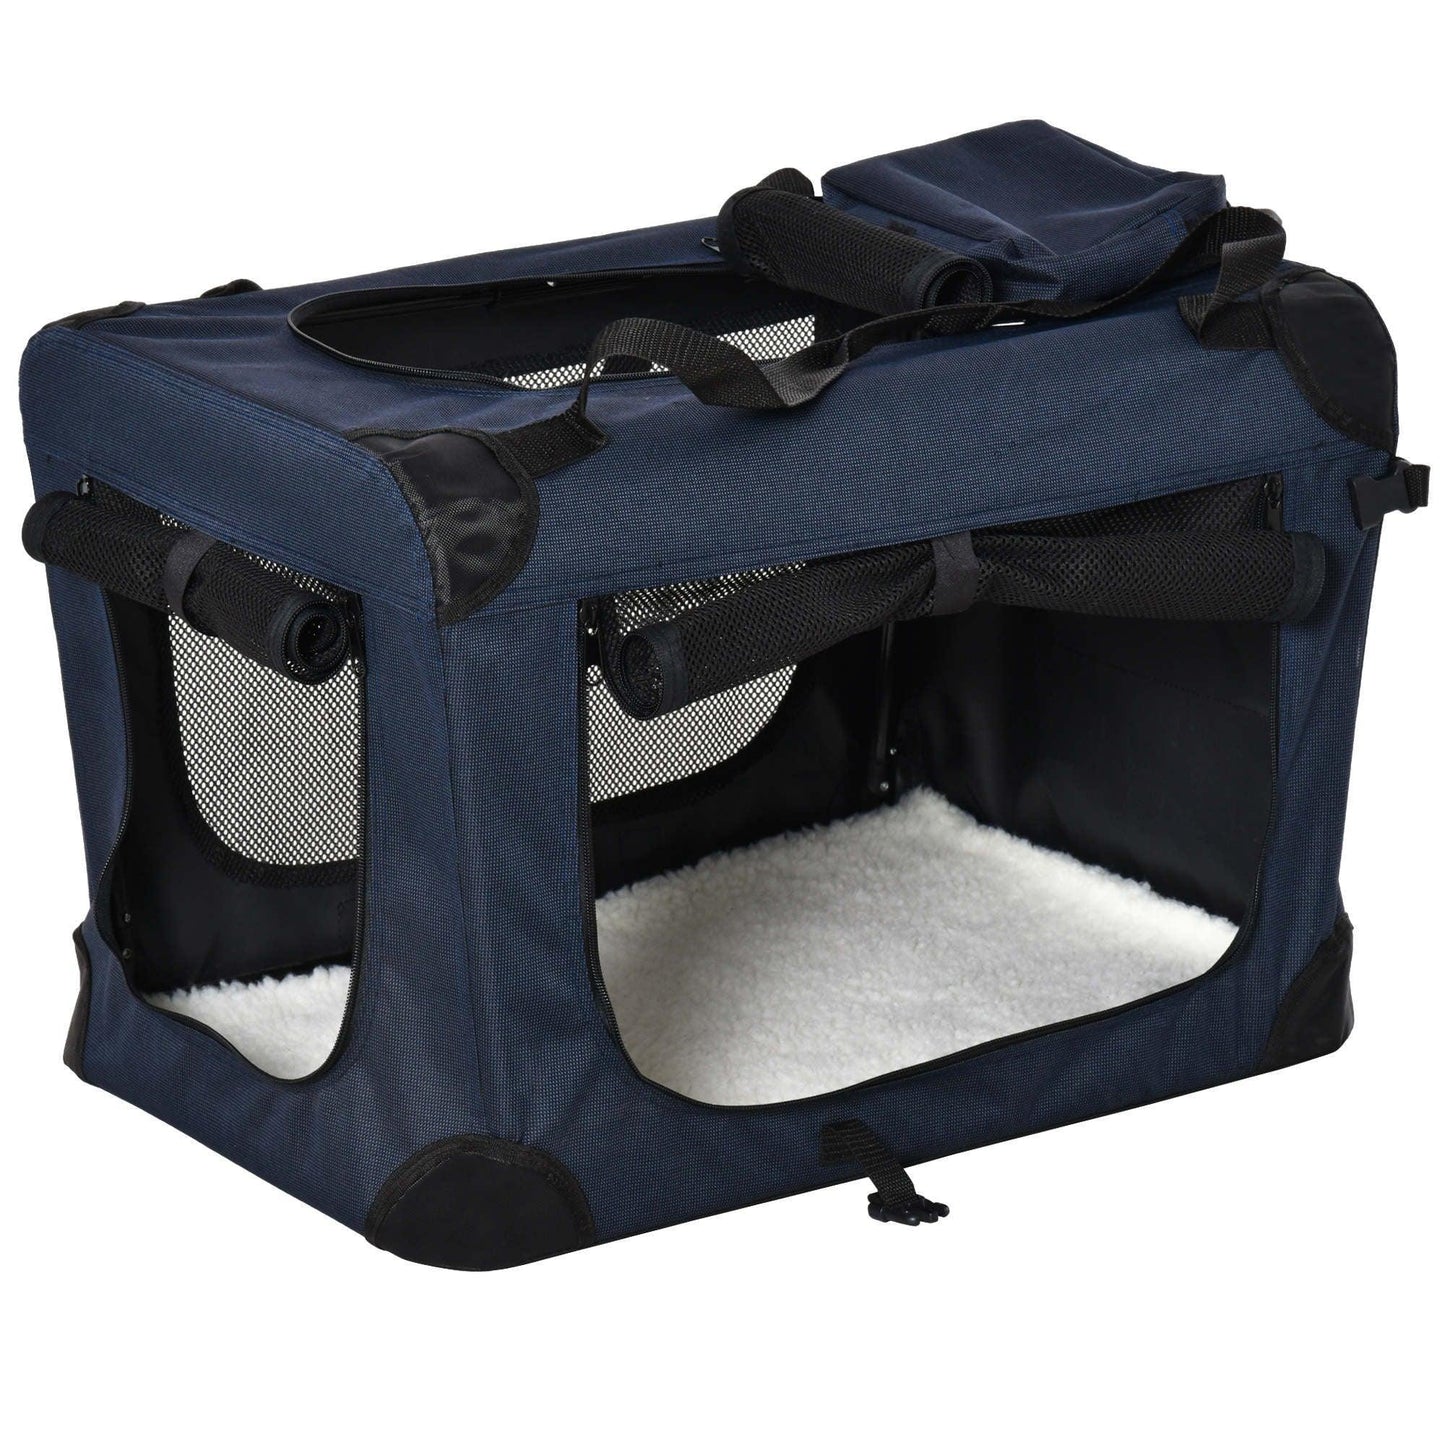 PawHut Portable Pet Carrier - Dark Blue, 60 x 41.5 x 41 cm - ALL4U RETAILER LTD